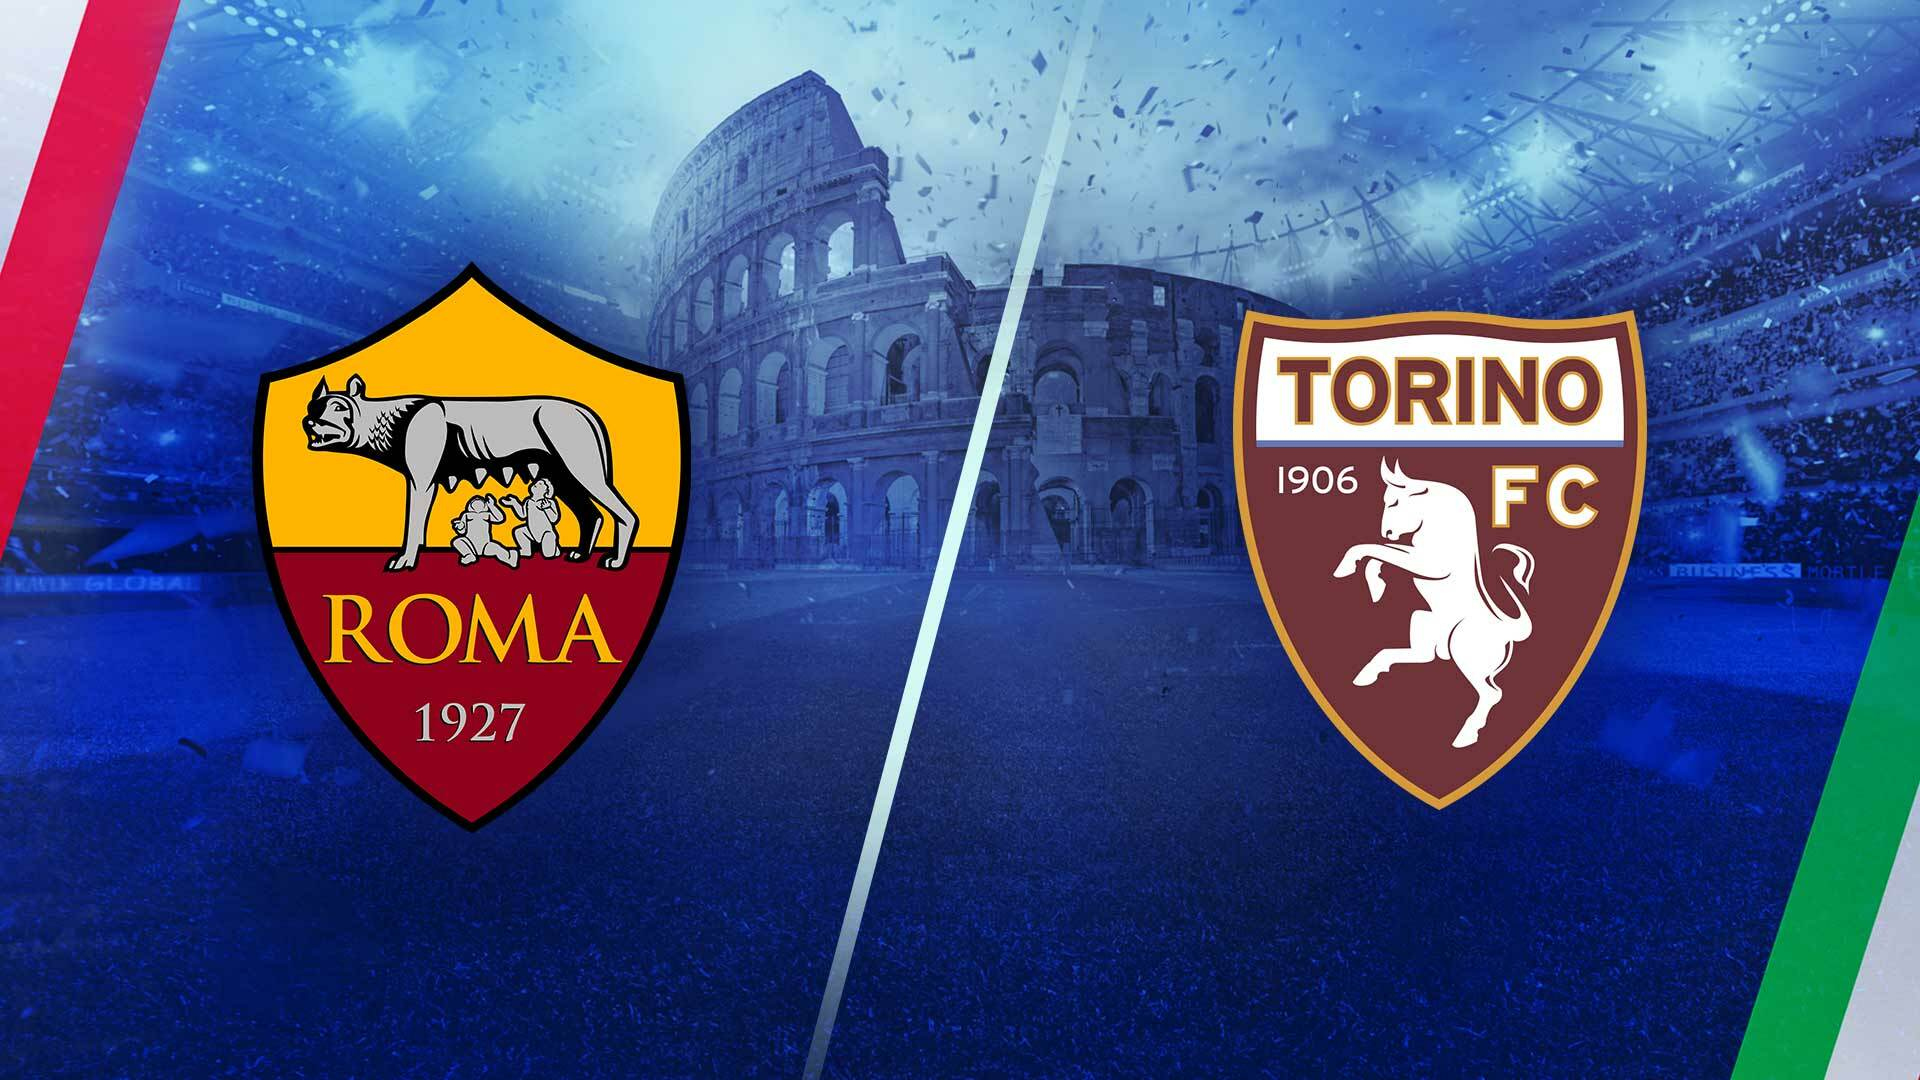 Roma vs torino